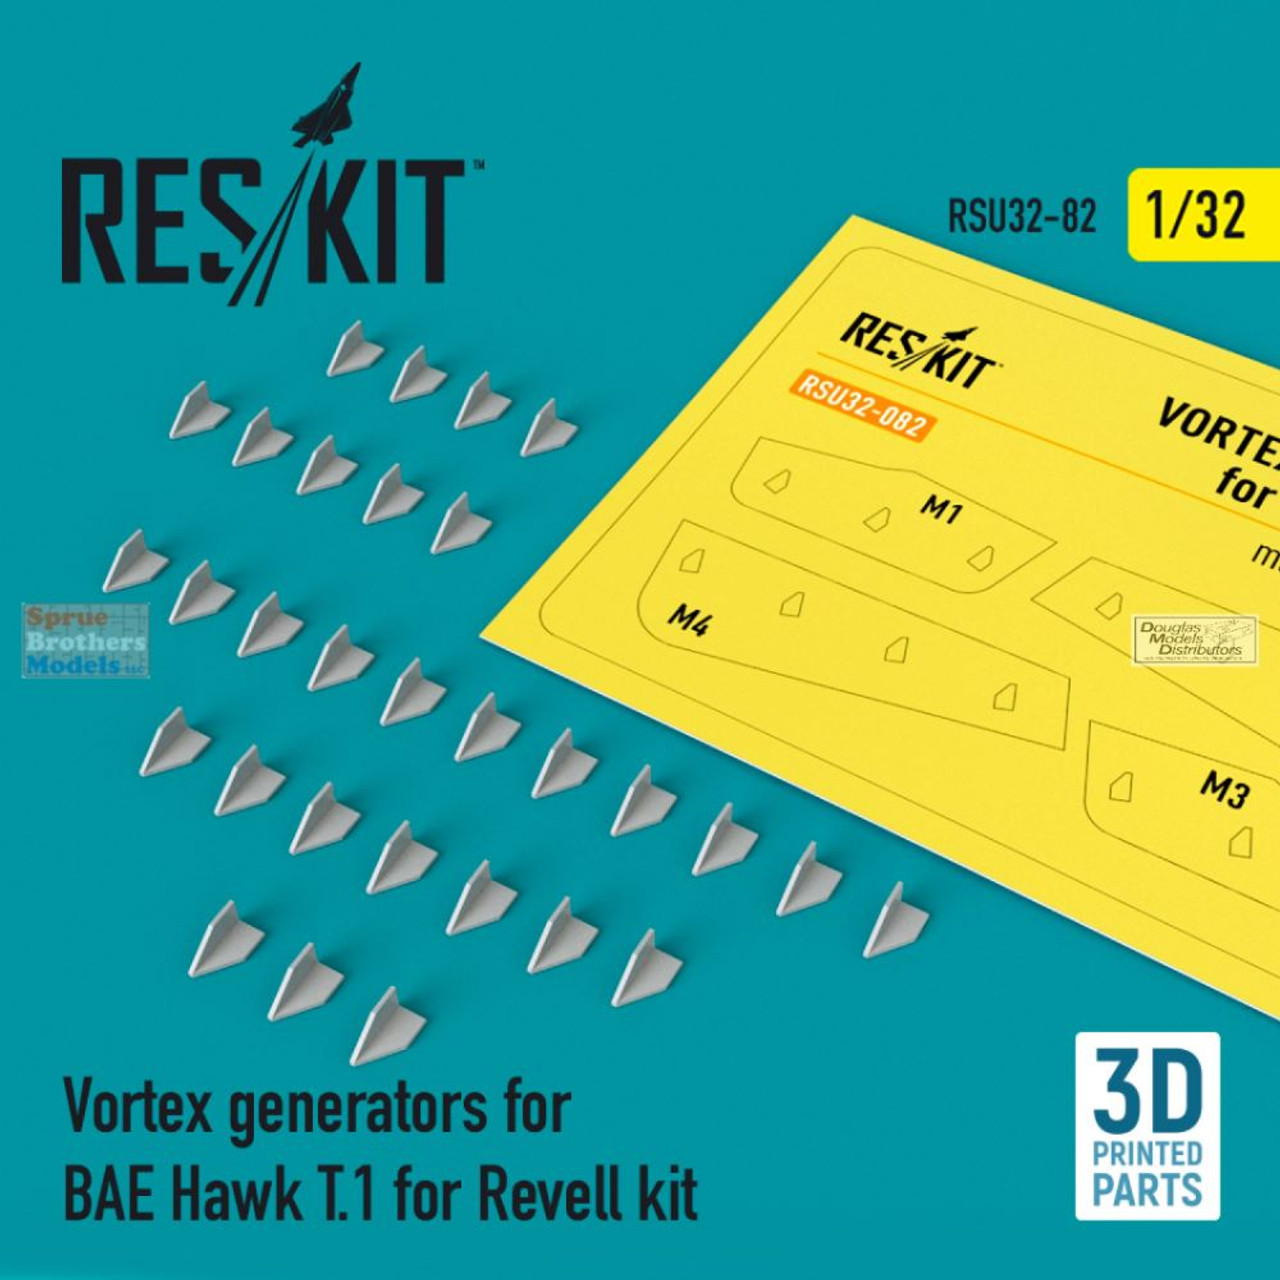 RESRSU320082U 1:32 ResKit Vortex Generators for BAe Hawk T.1 (REV kit) -  Sprue Brothers Models LLC